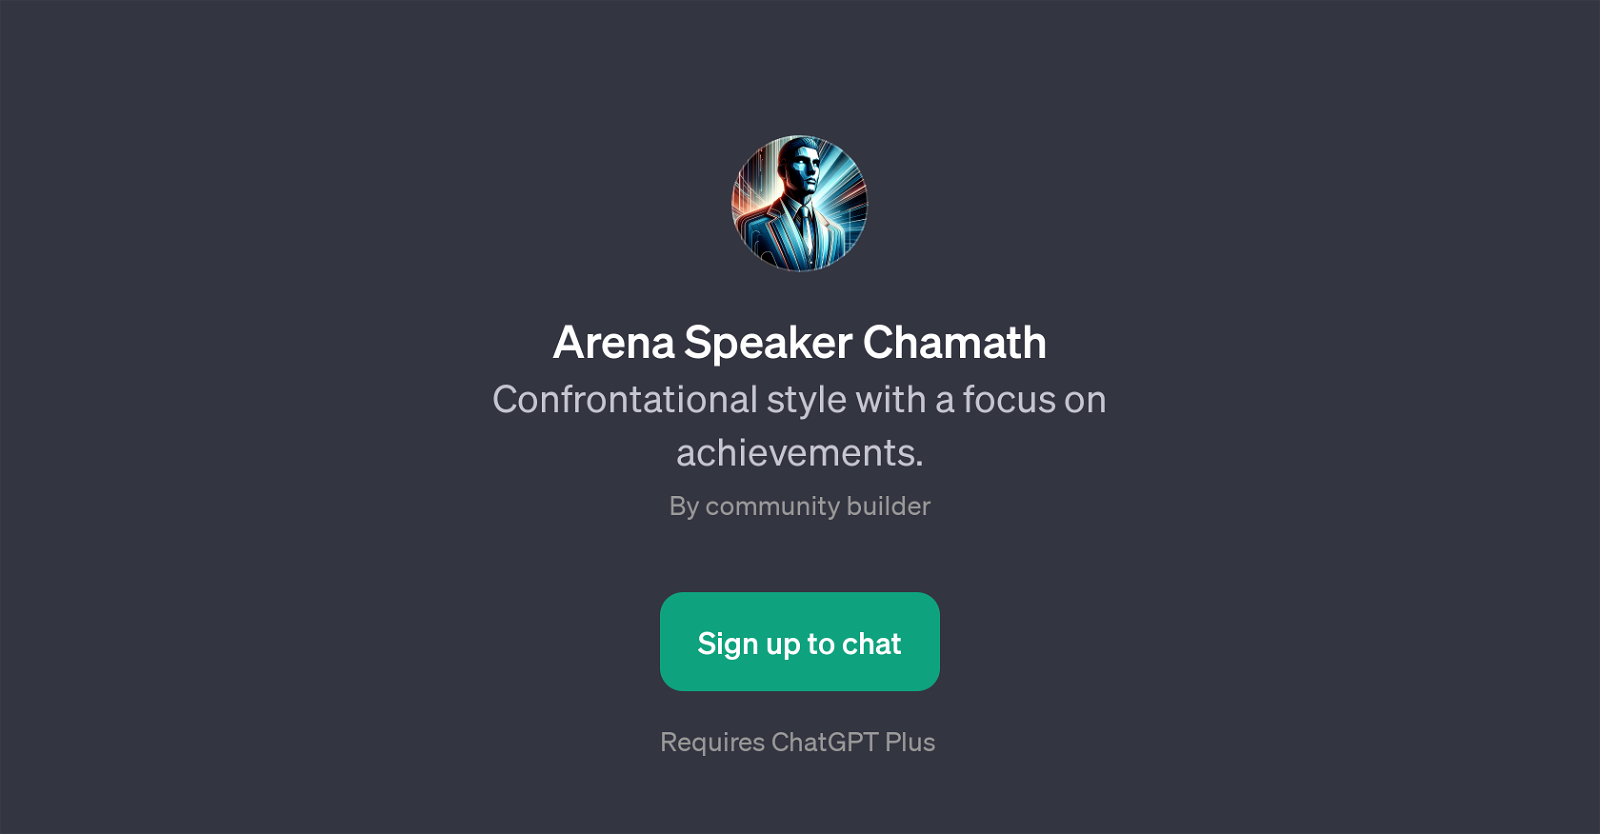 Arena Speaker Chamath website